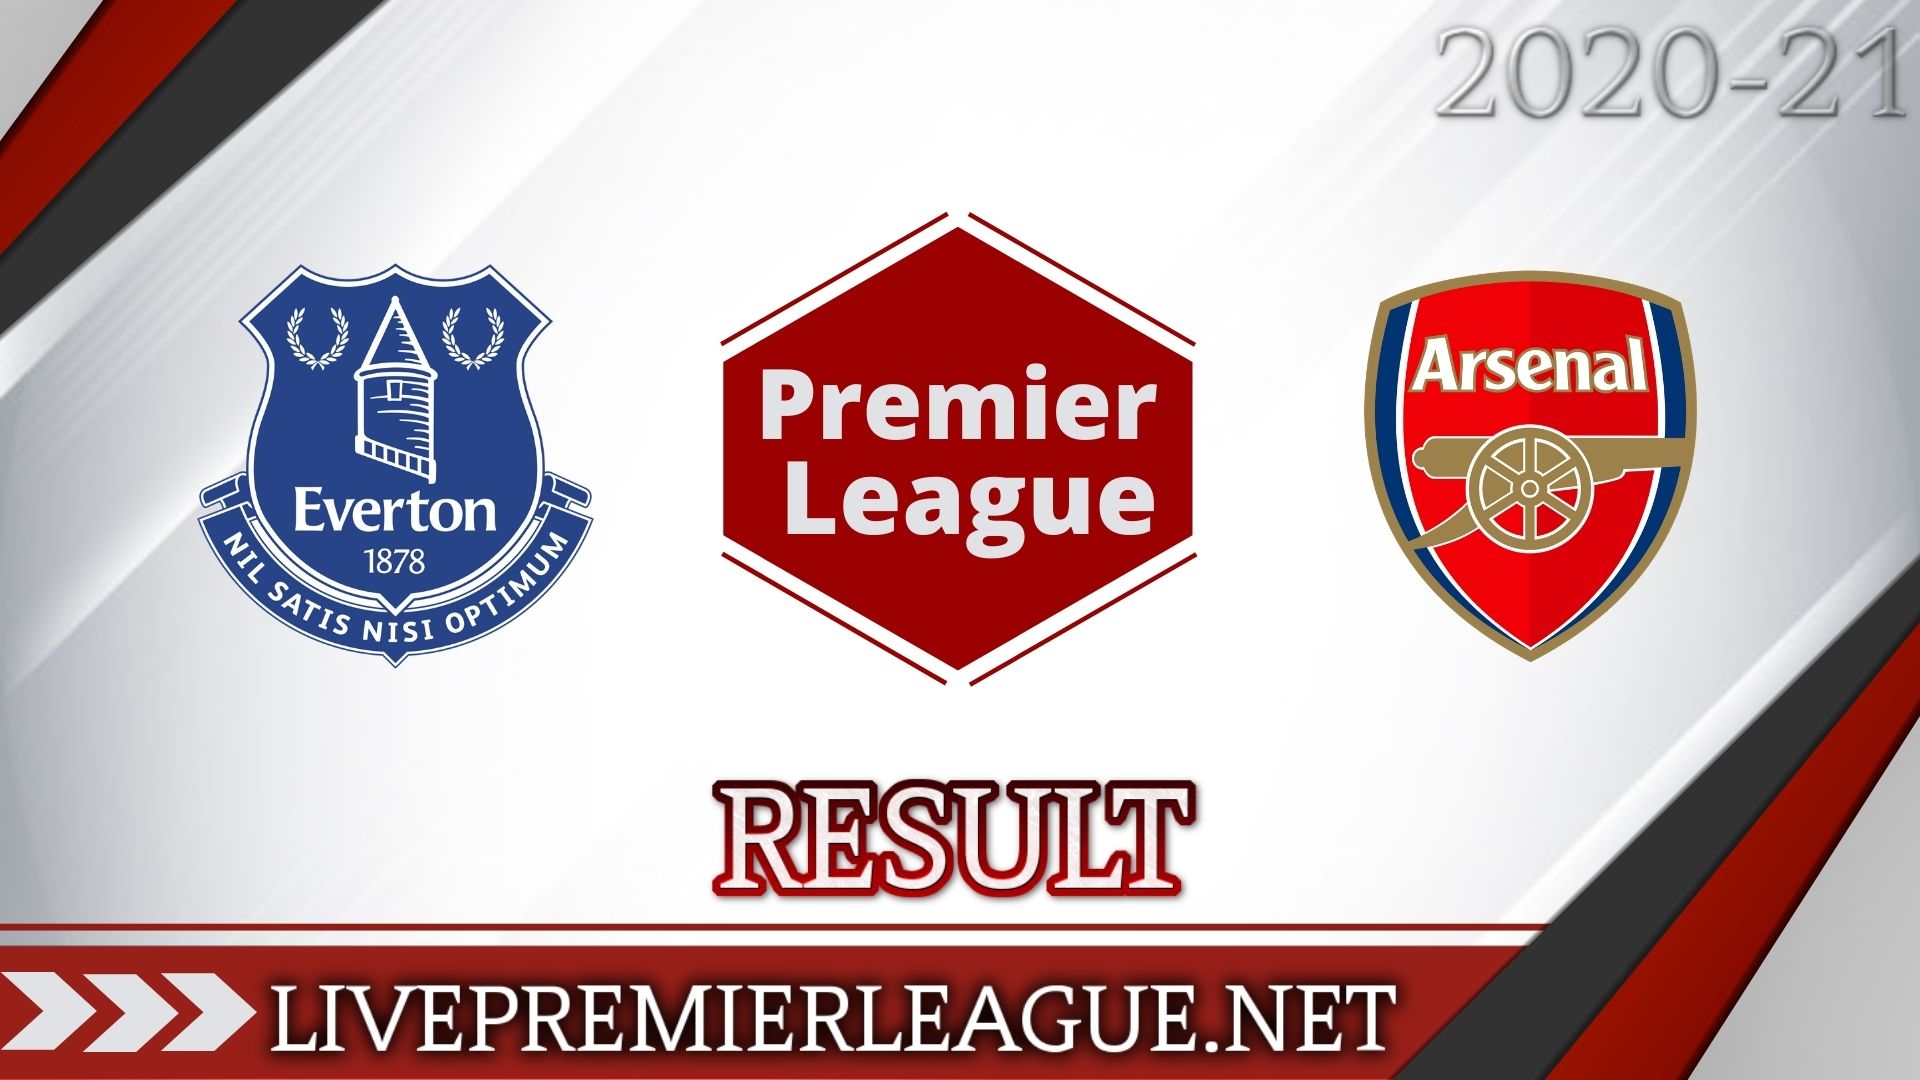 Everton Vs Arsenal | Week 14 Result 2020